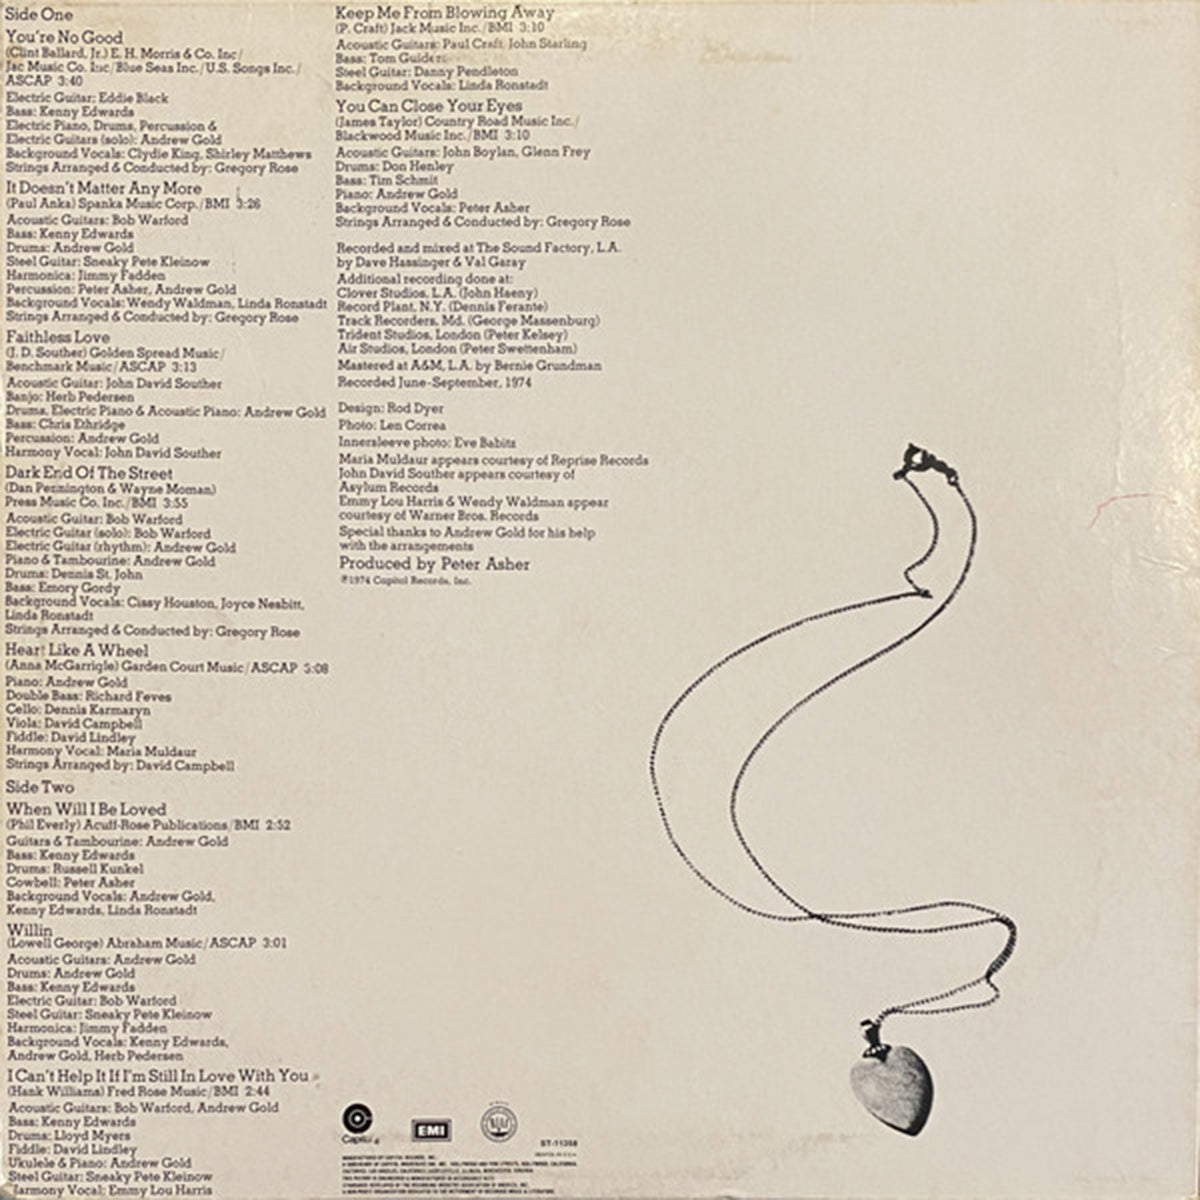 Linda Ronstadt – Heart Like A Wheel - 1975 US Pressing